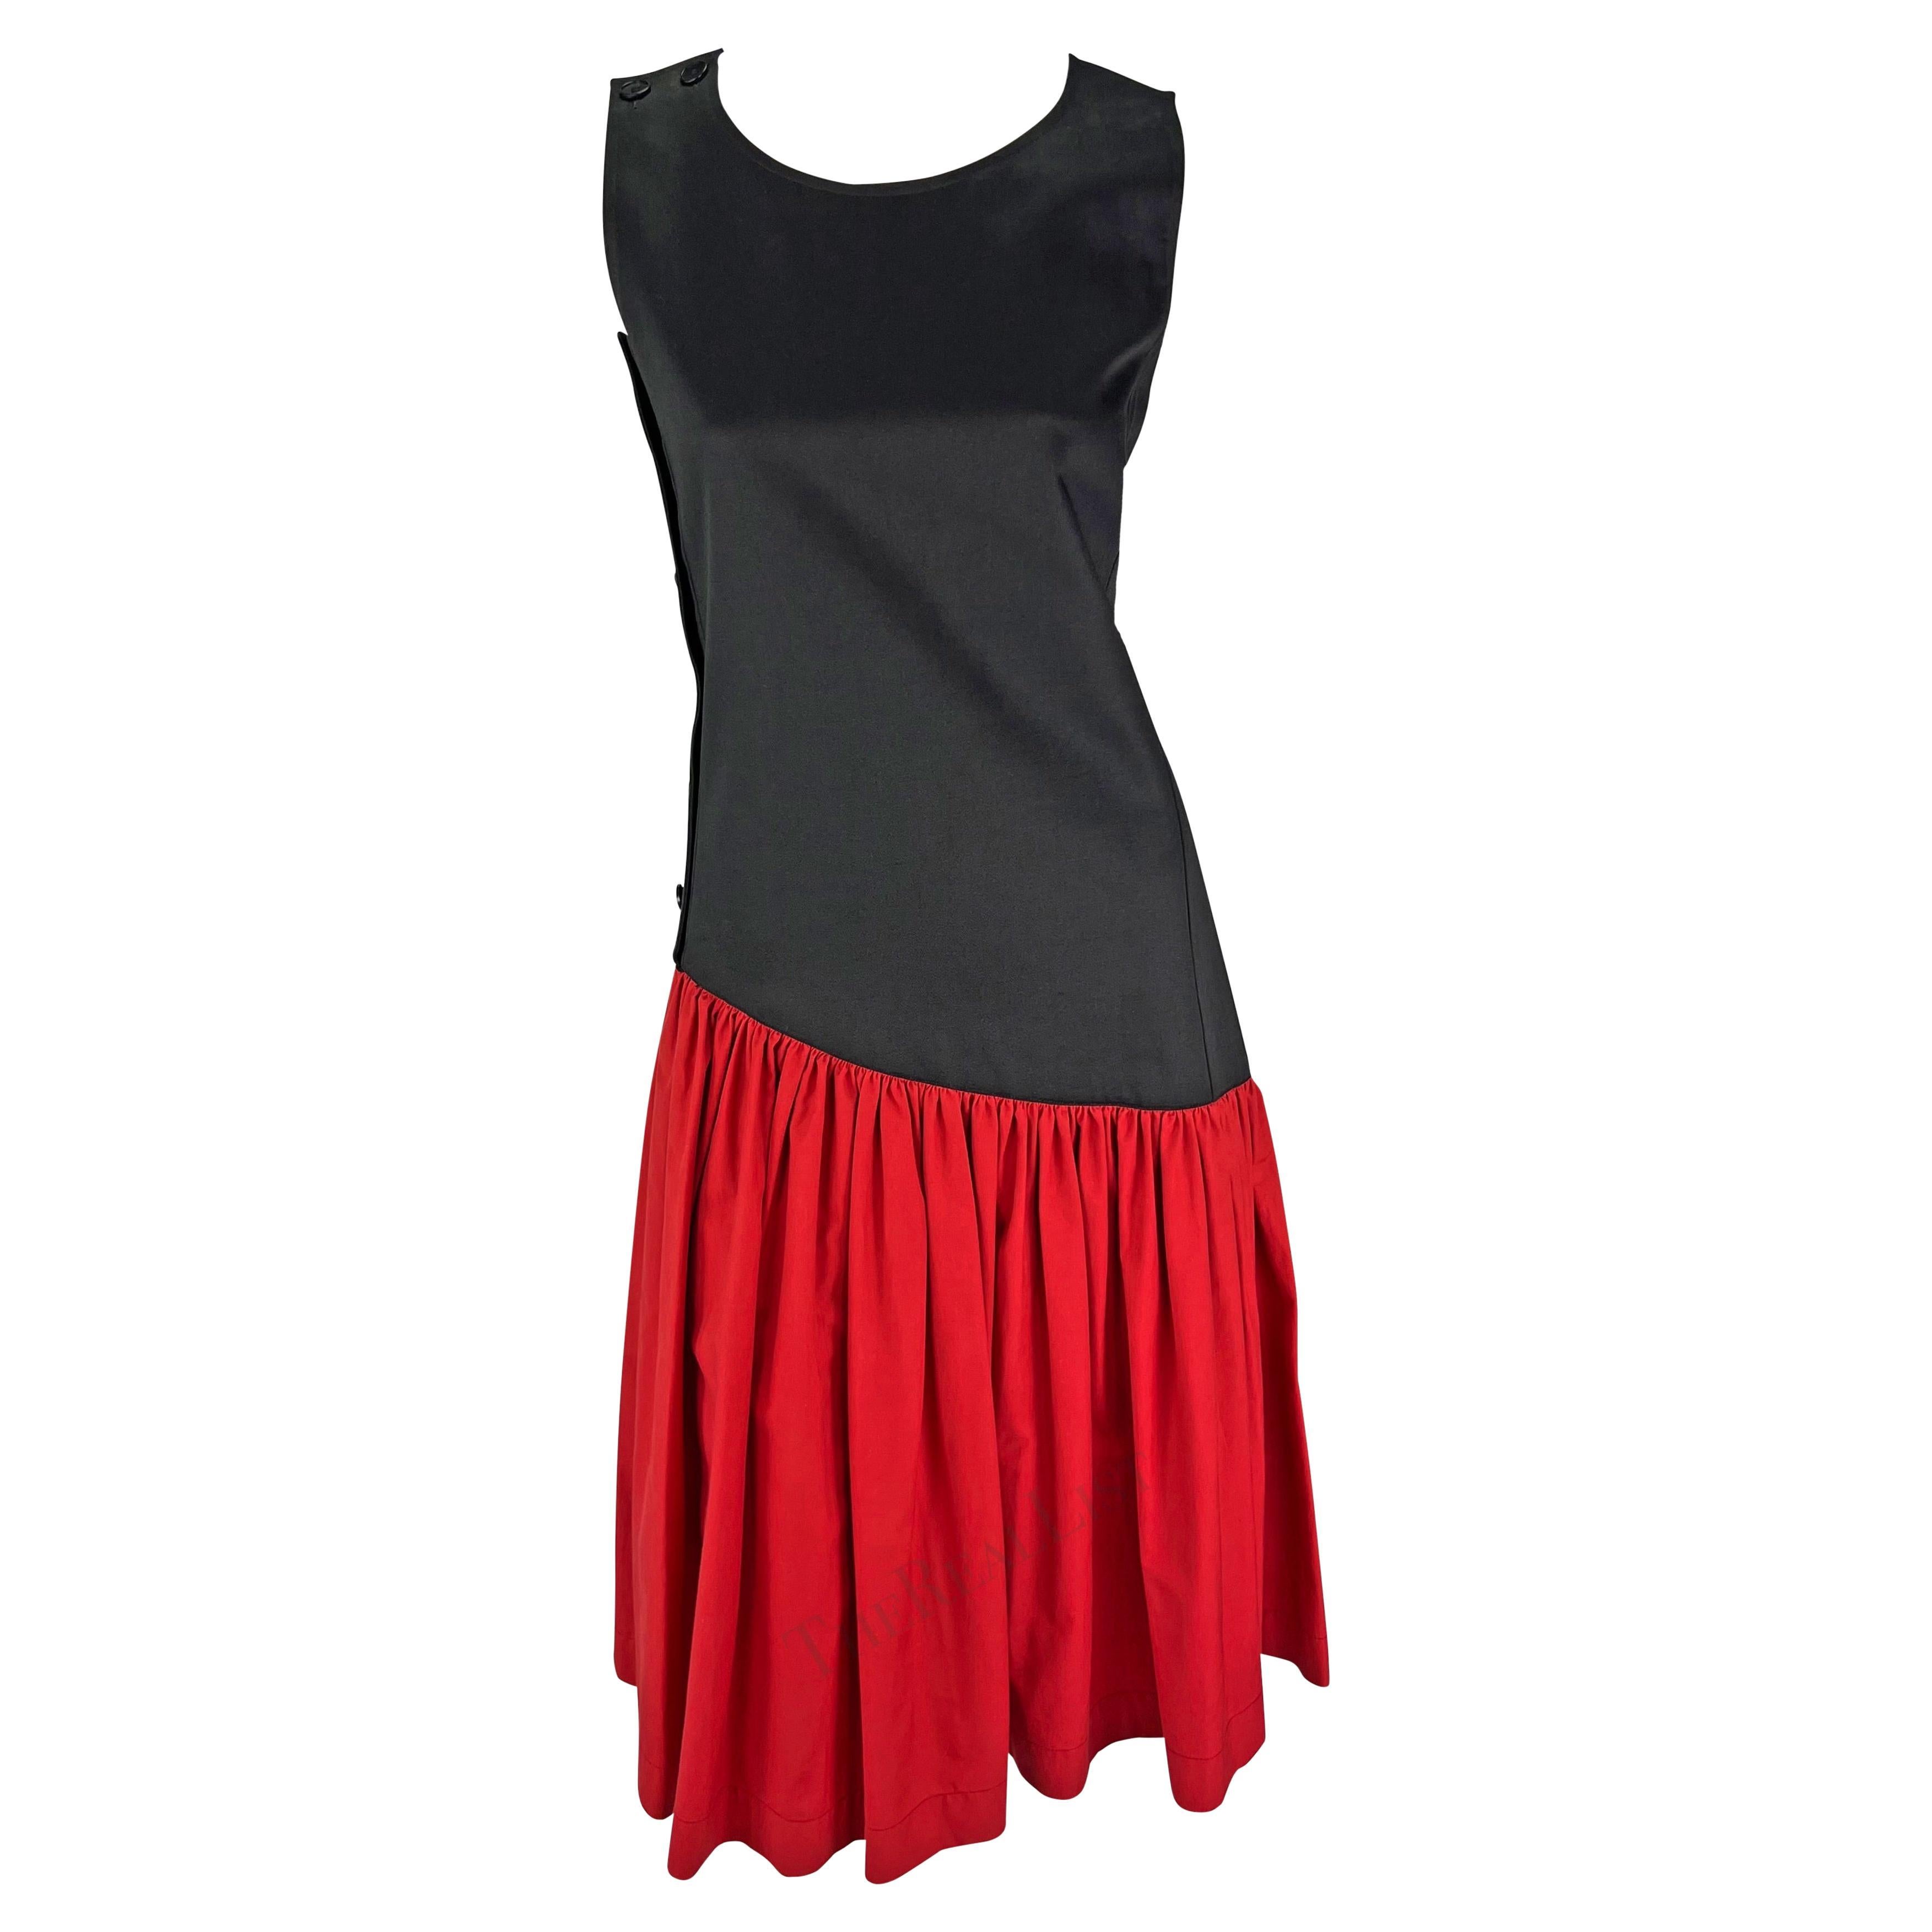 S/S 1983 Saint Laurent Rive Gauche Runway Ad Black Red Sleeveless Dress For Sale